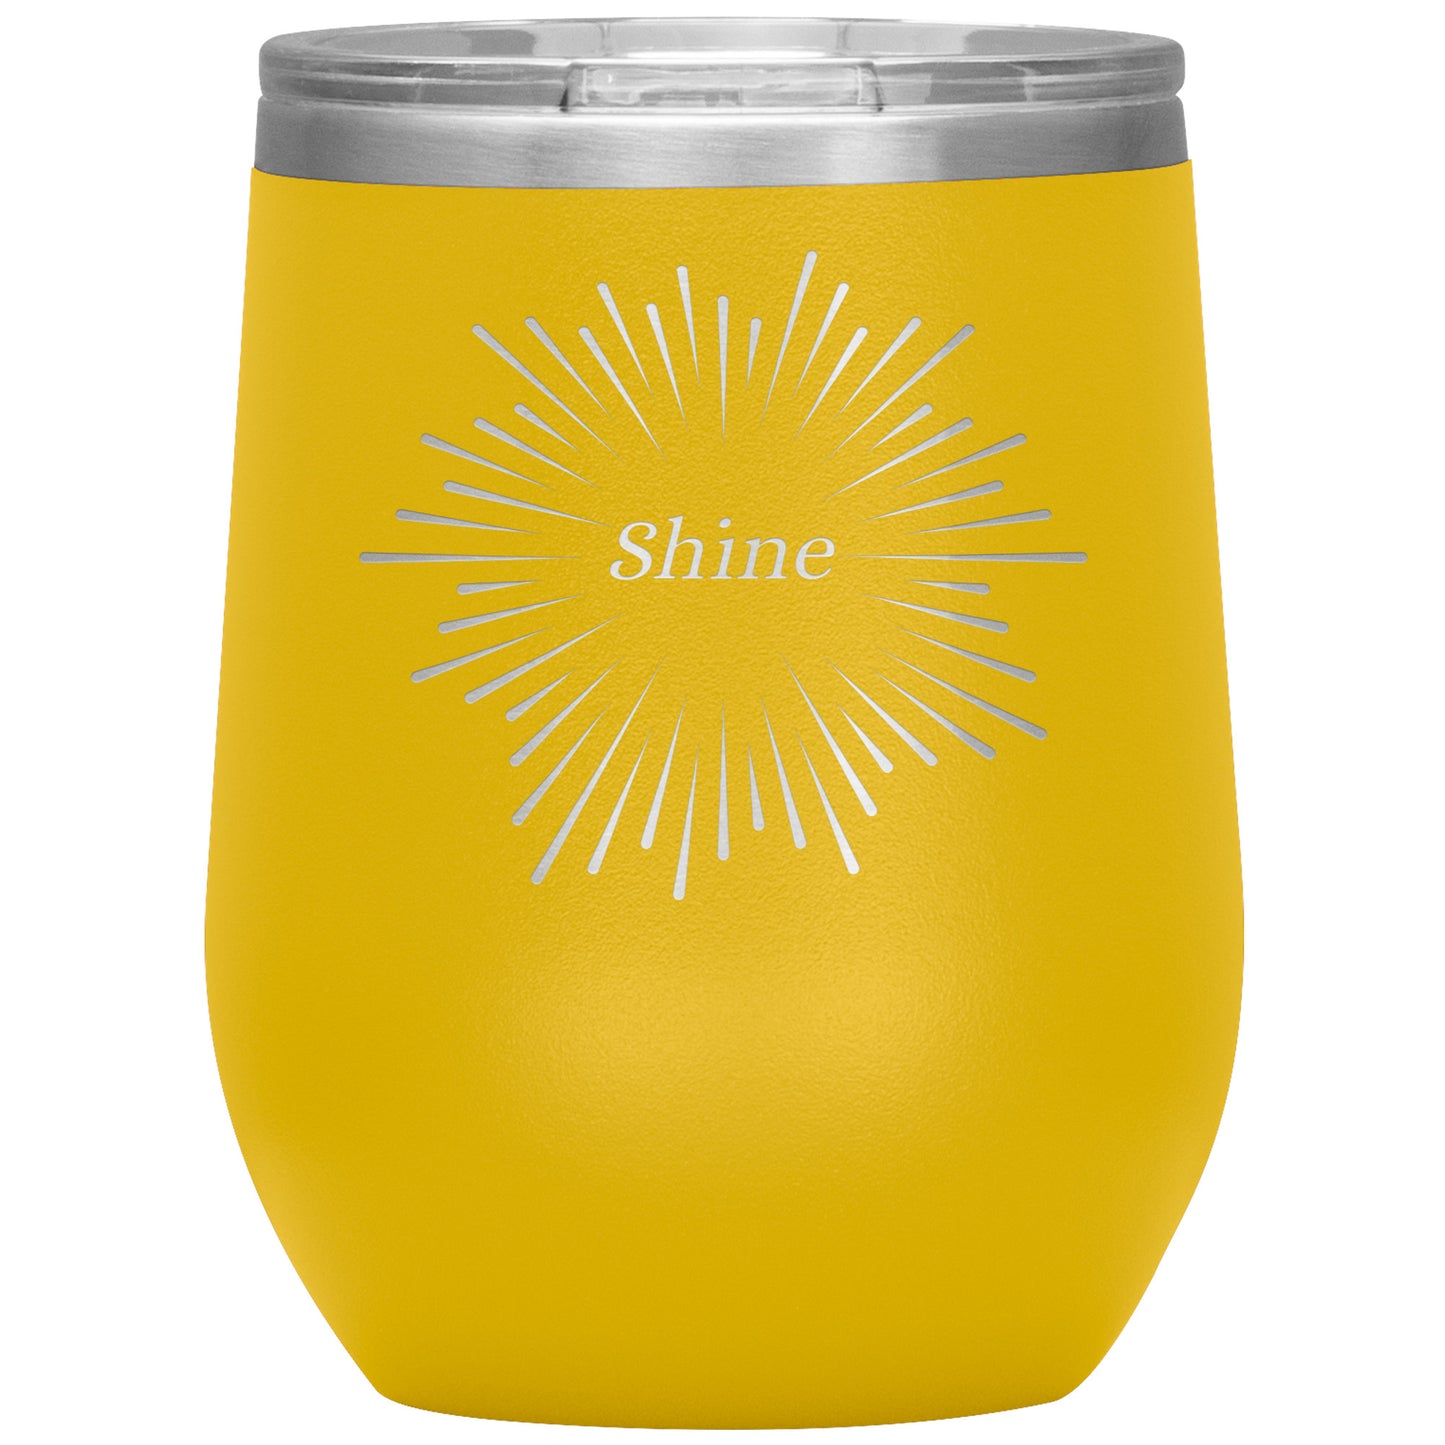 Shine 🎆 Tumbler